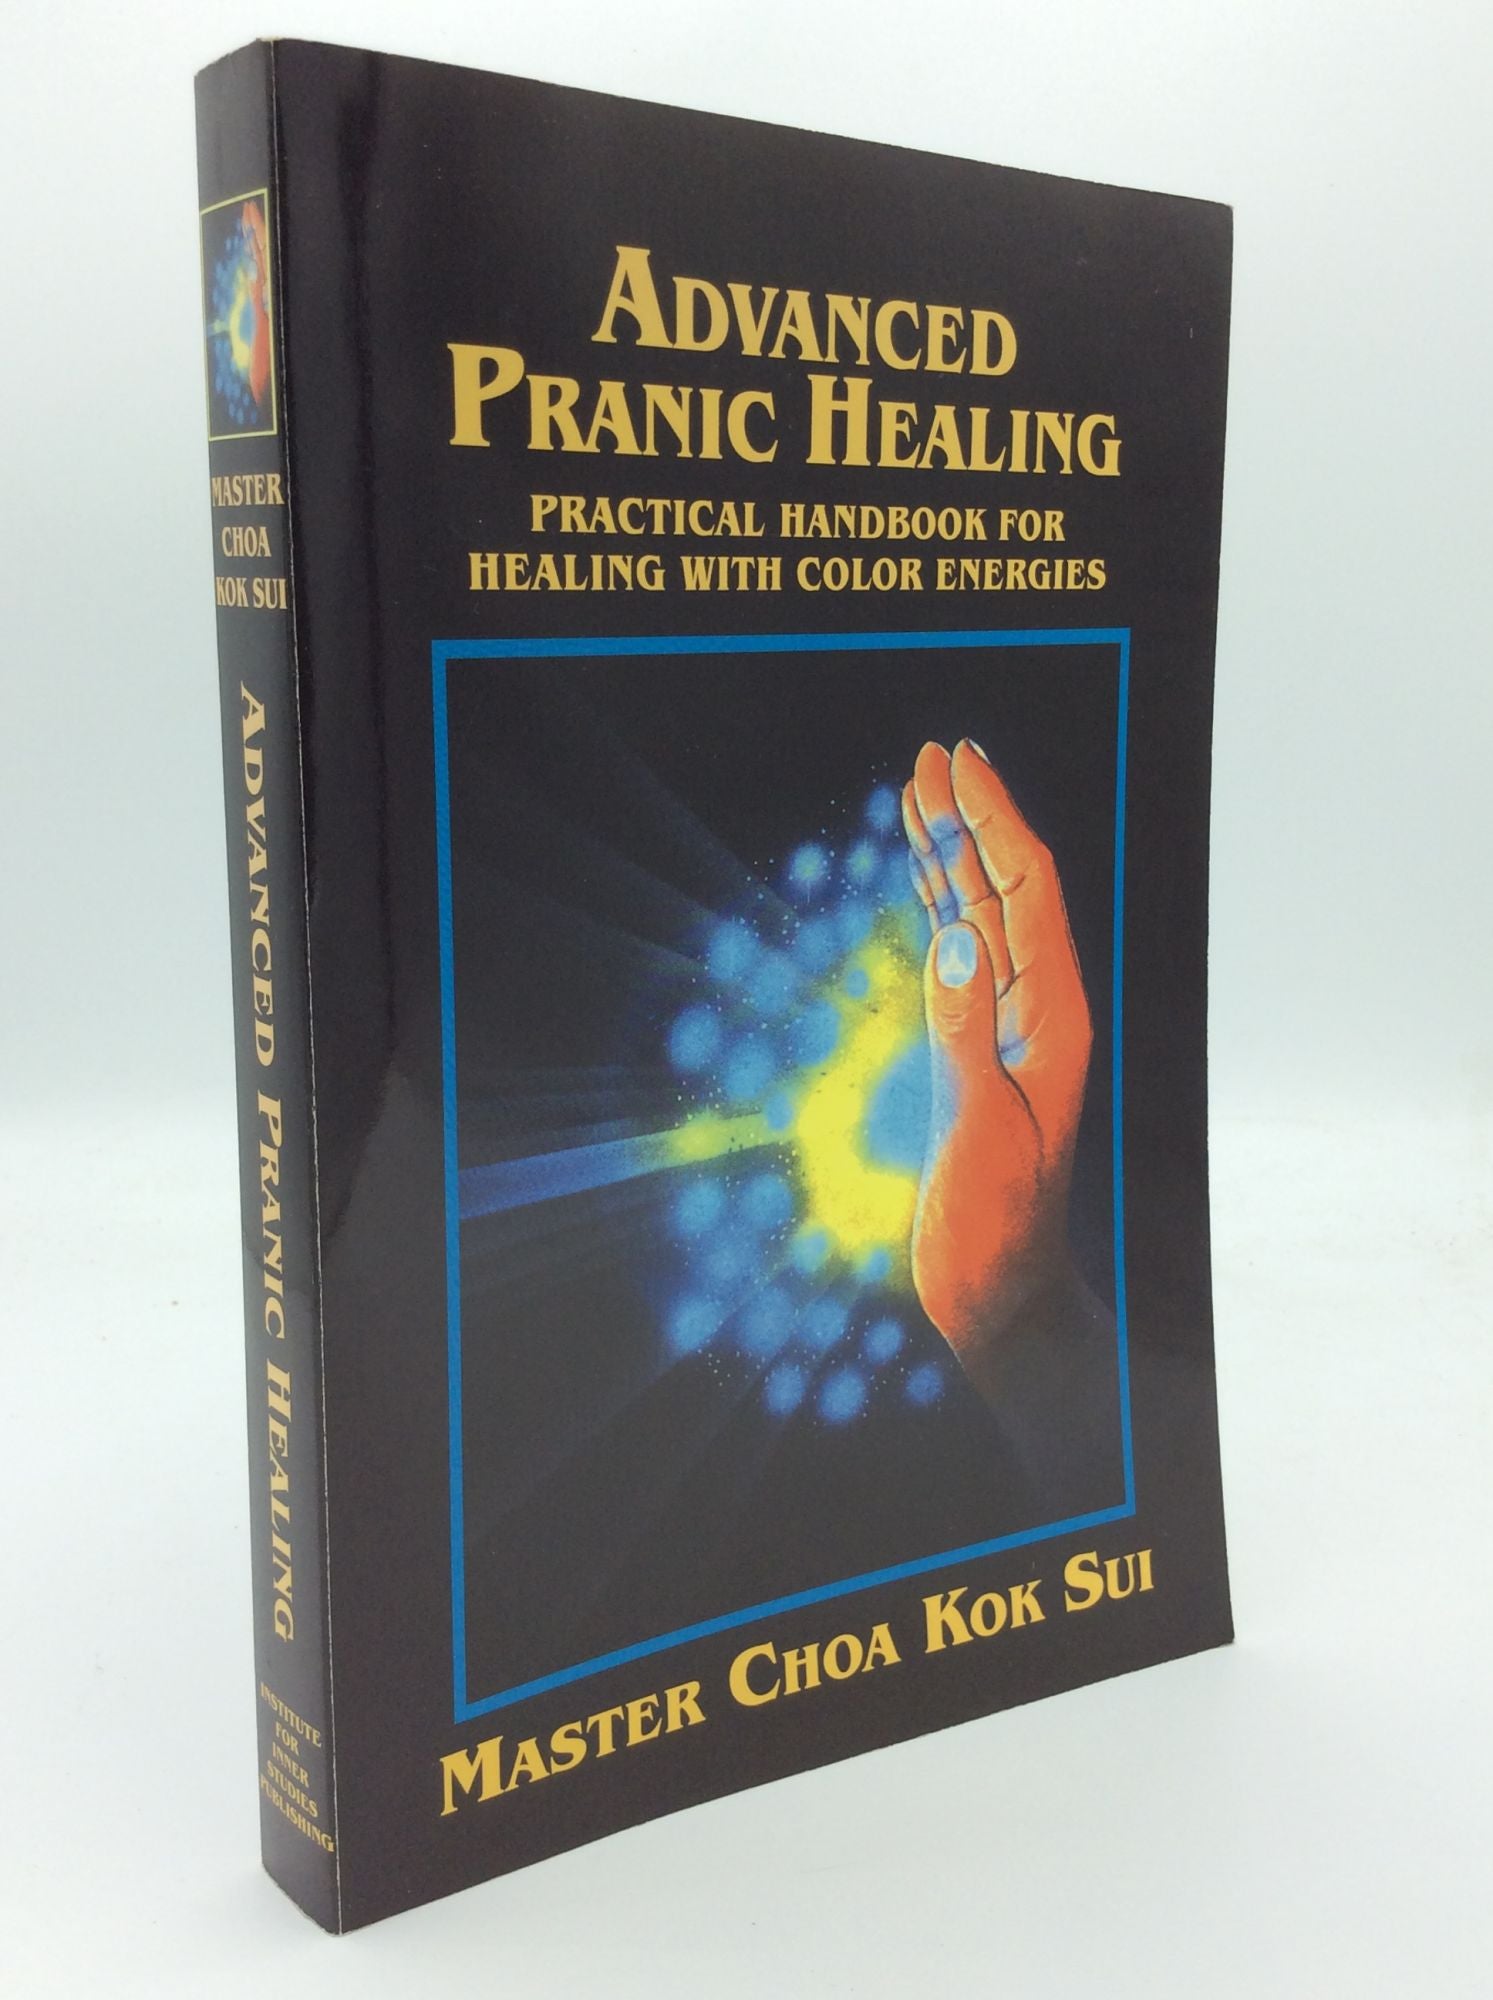 ADVANCED PRANIC HEALING: A Practical Manual for Color Pranic Healing by  Choa Kok Sui on Kubik Fine Books Ltd